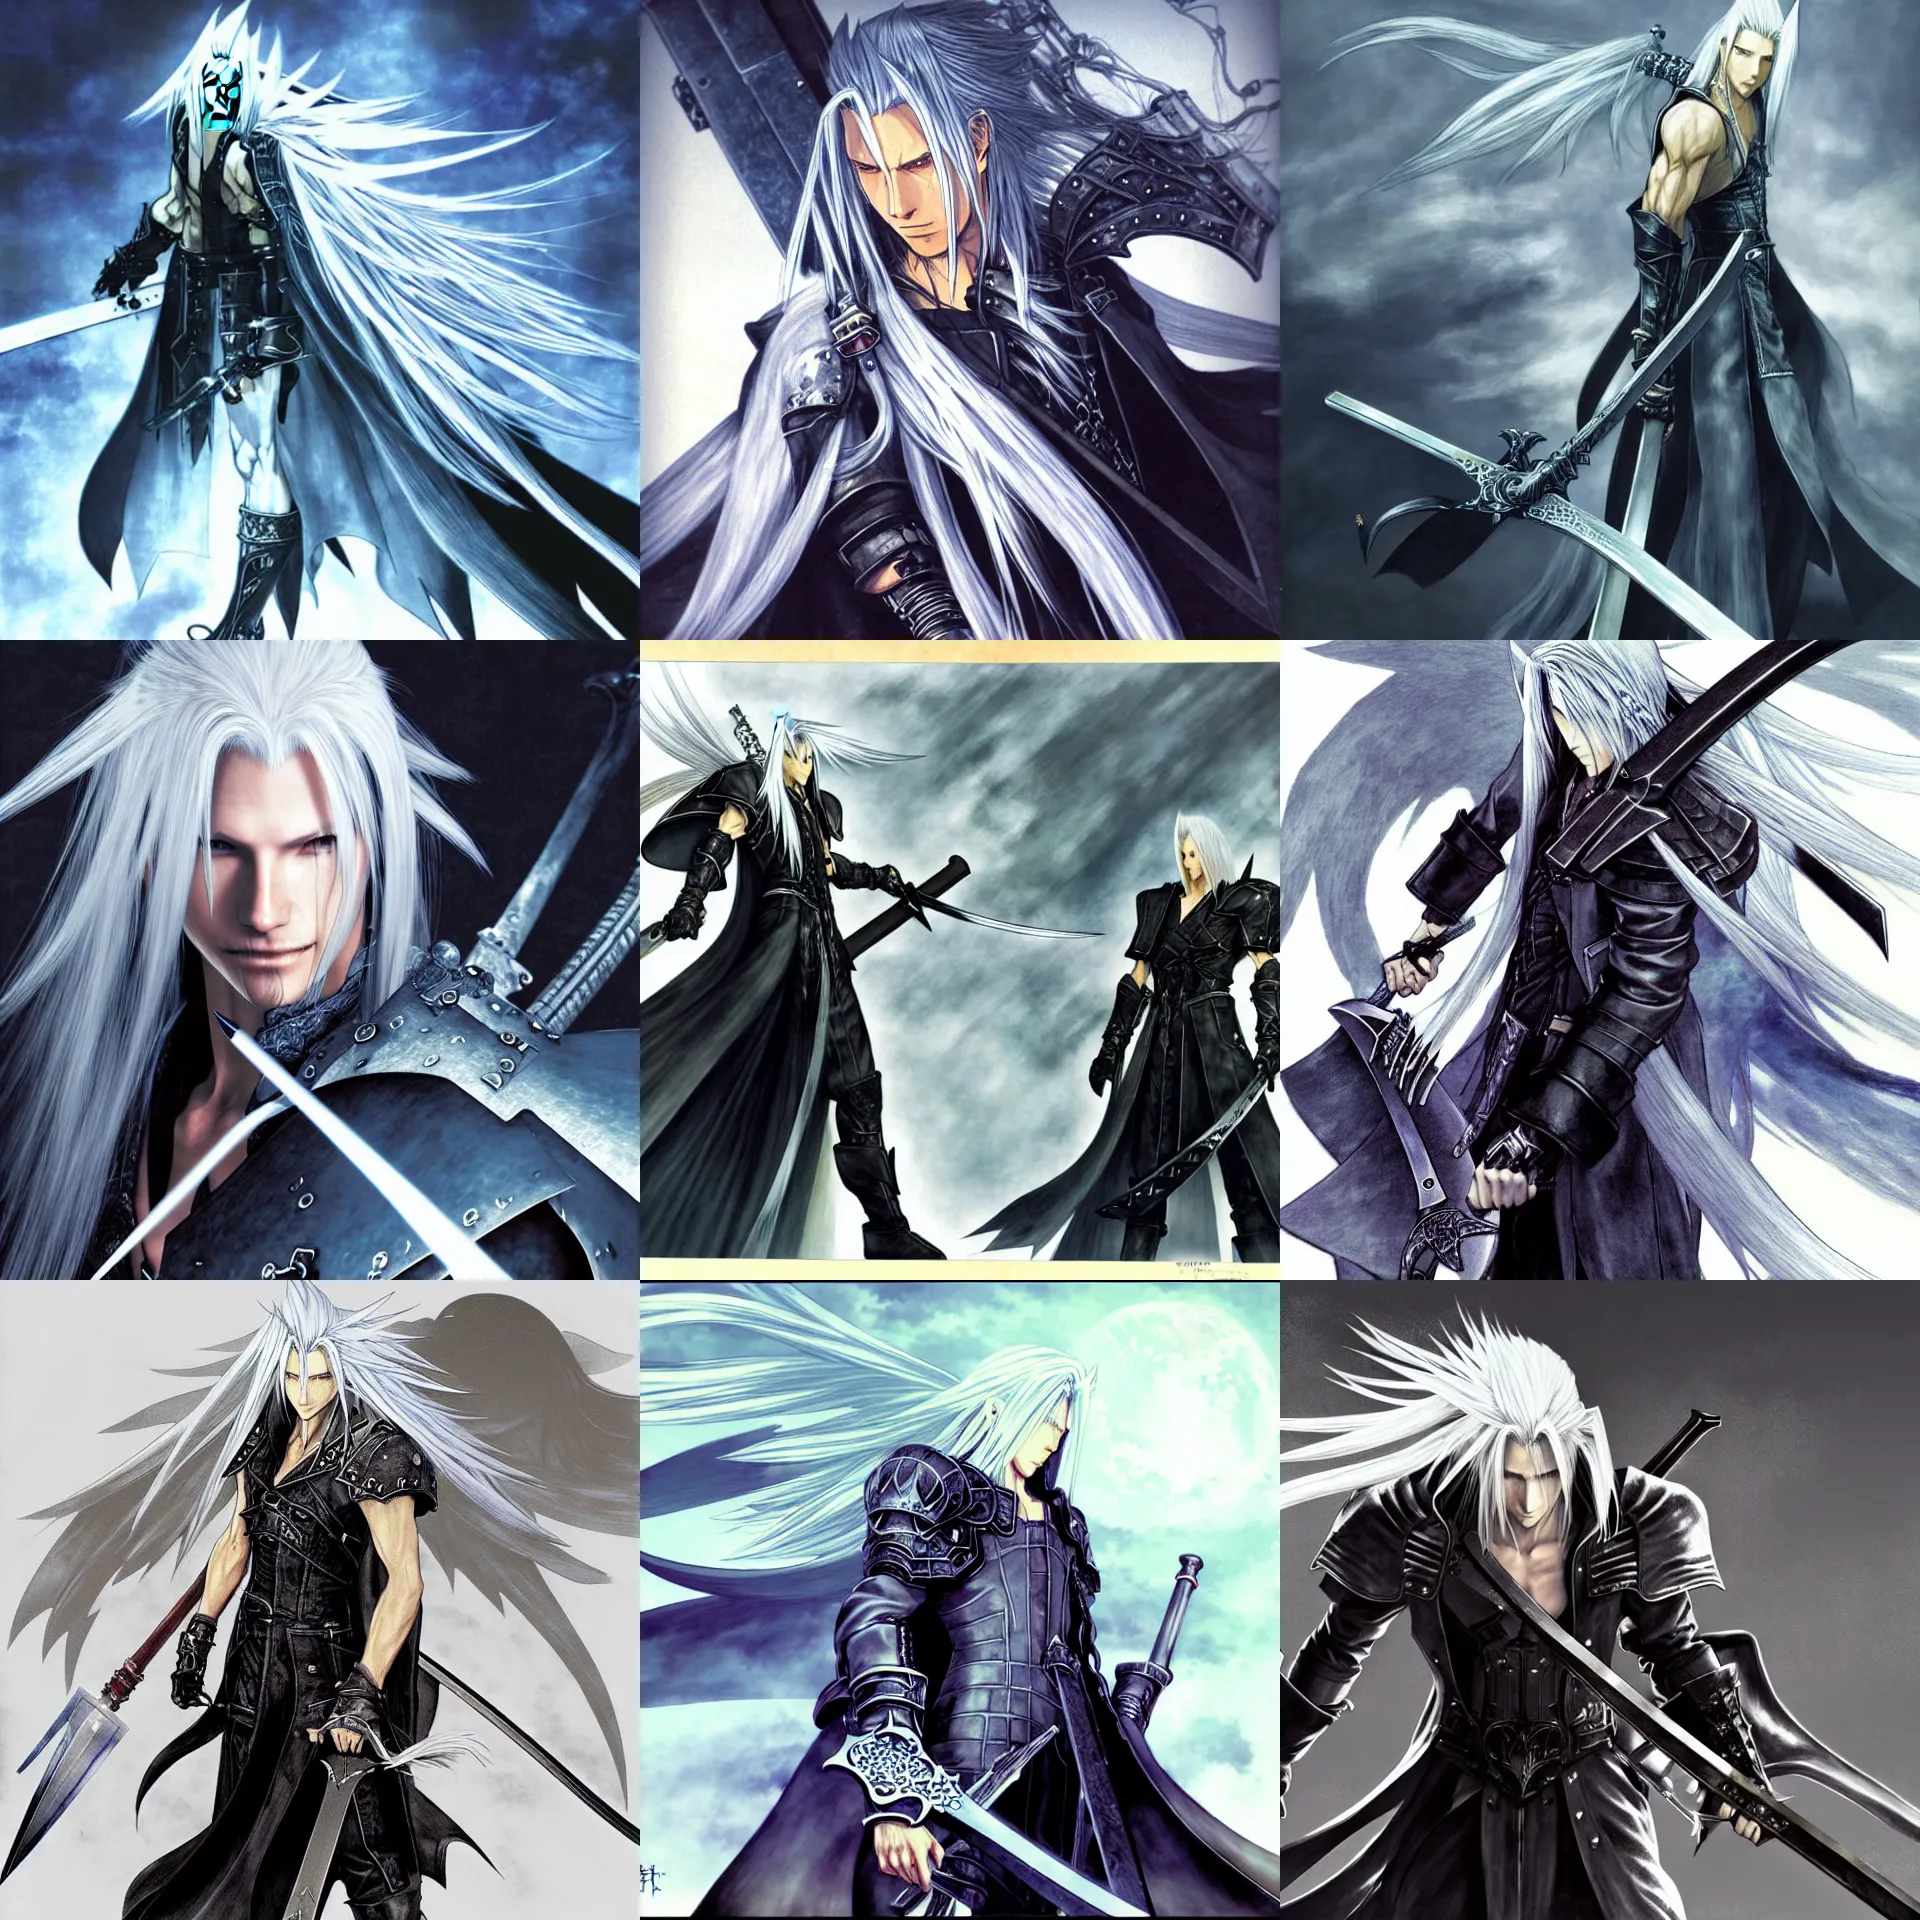 Prompt: Sephiroth illustrated by Akihiko Yoshida, concept art